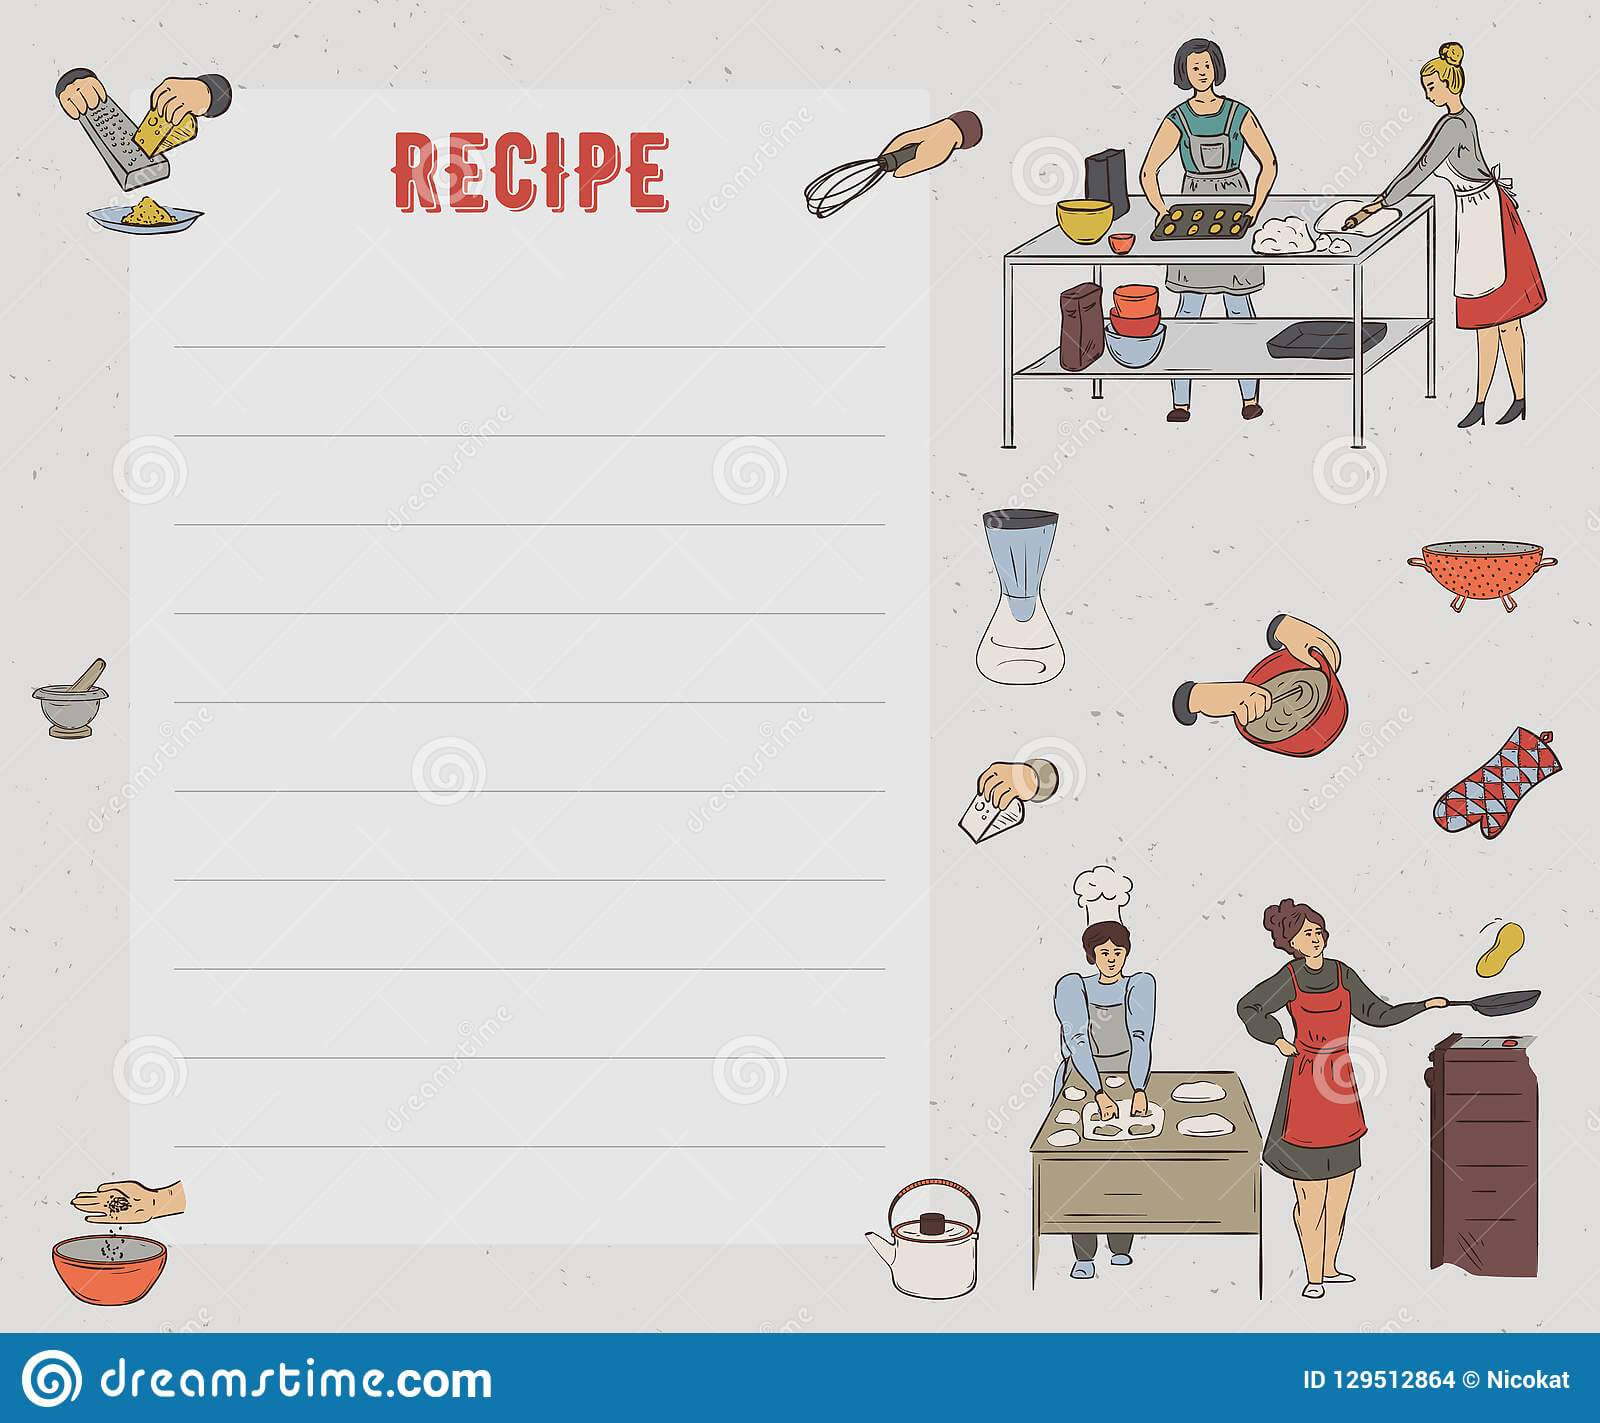 Recipe Card. Cookbook Page. Design Template With People For Recipe Card Design Template